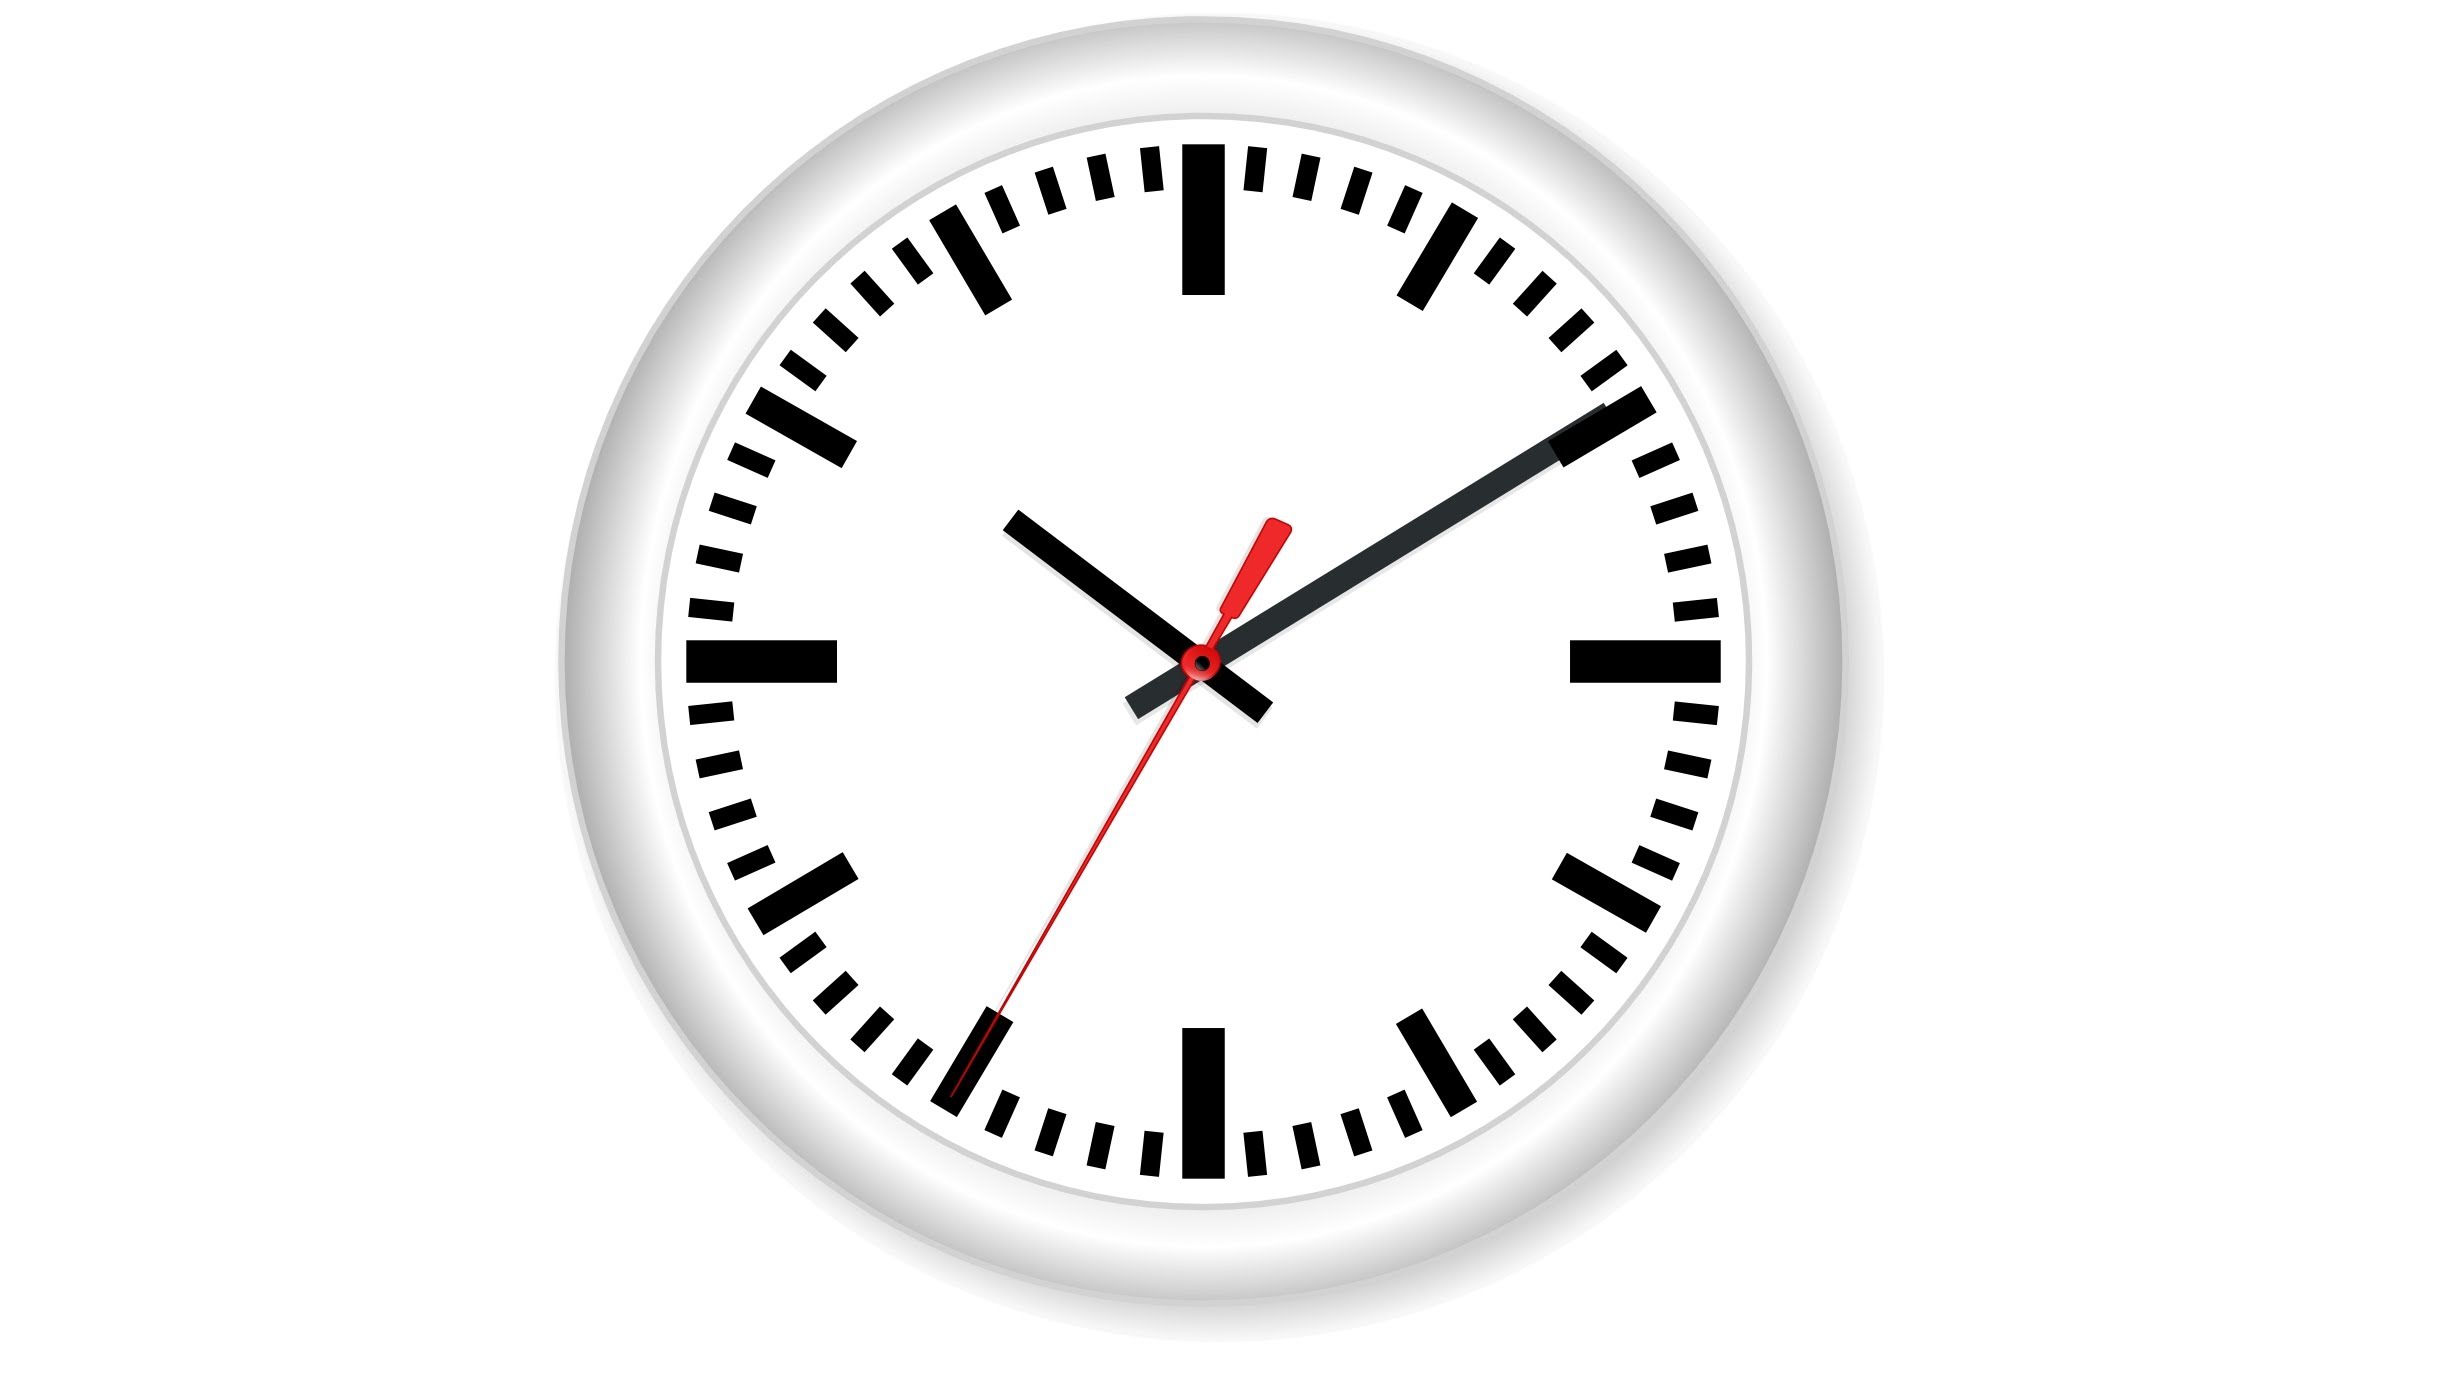 Clock ticking sound effect (3) - YouTube